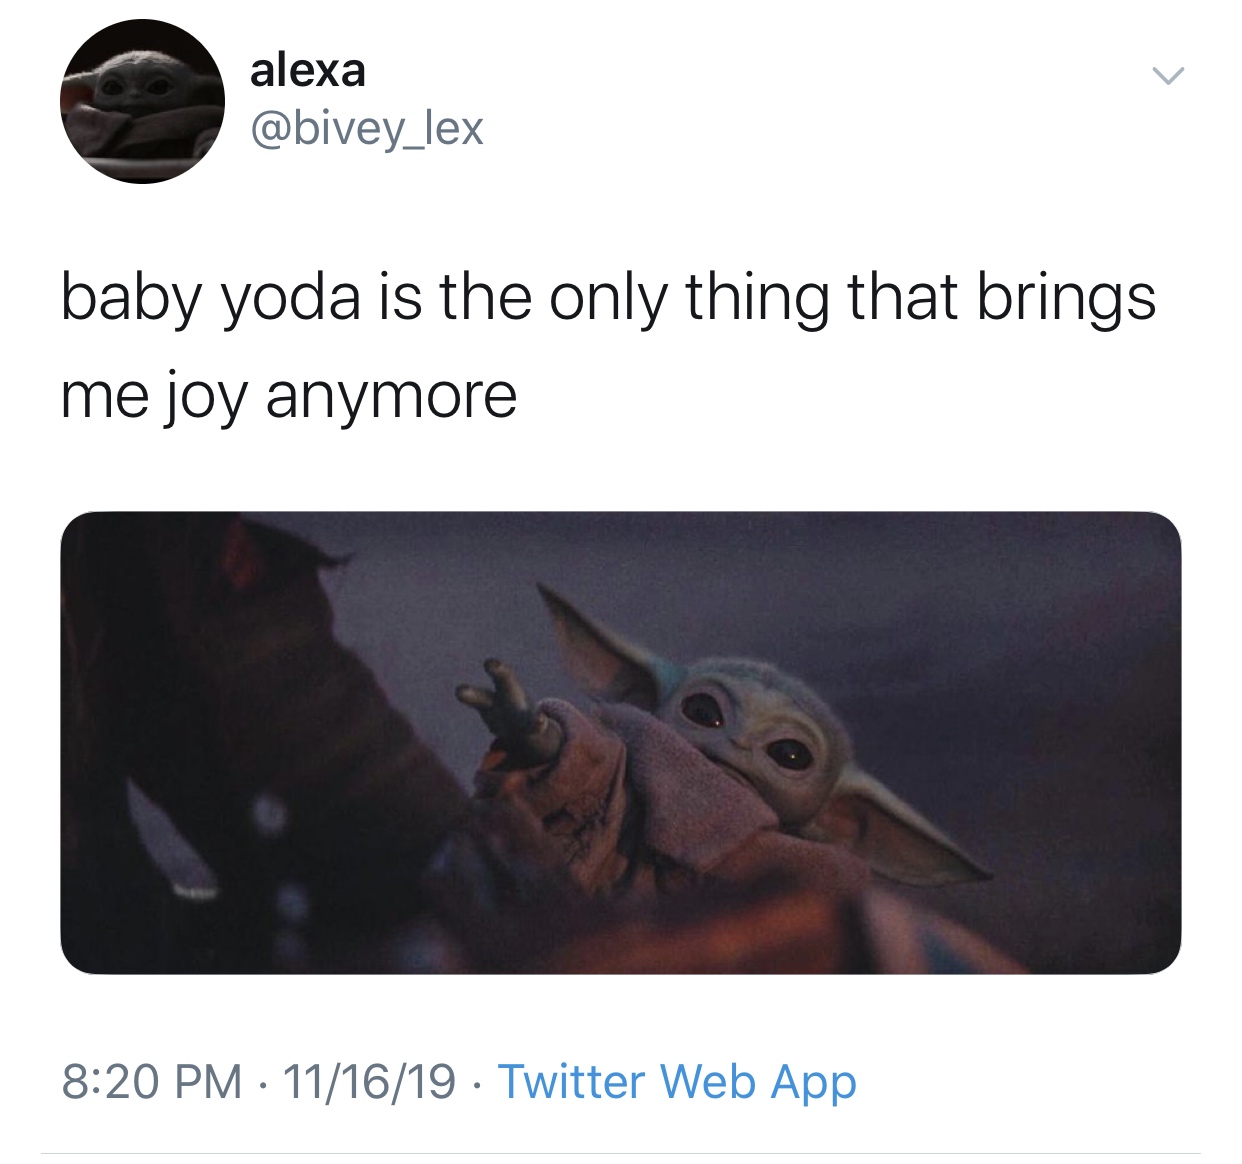 baby yoda meme  - alexa baby yoda is the only thing that brings me joy anymore 111619 Twitter Web App